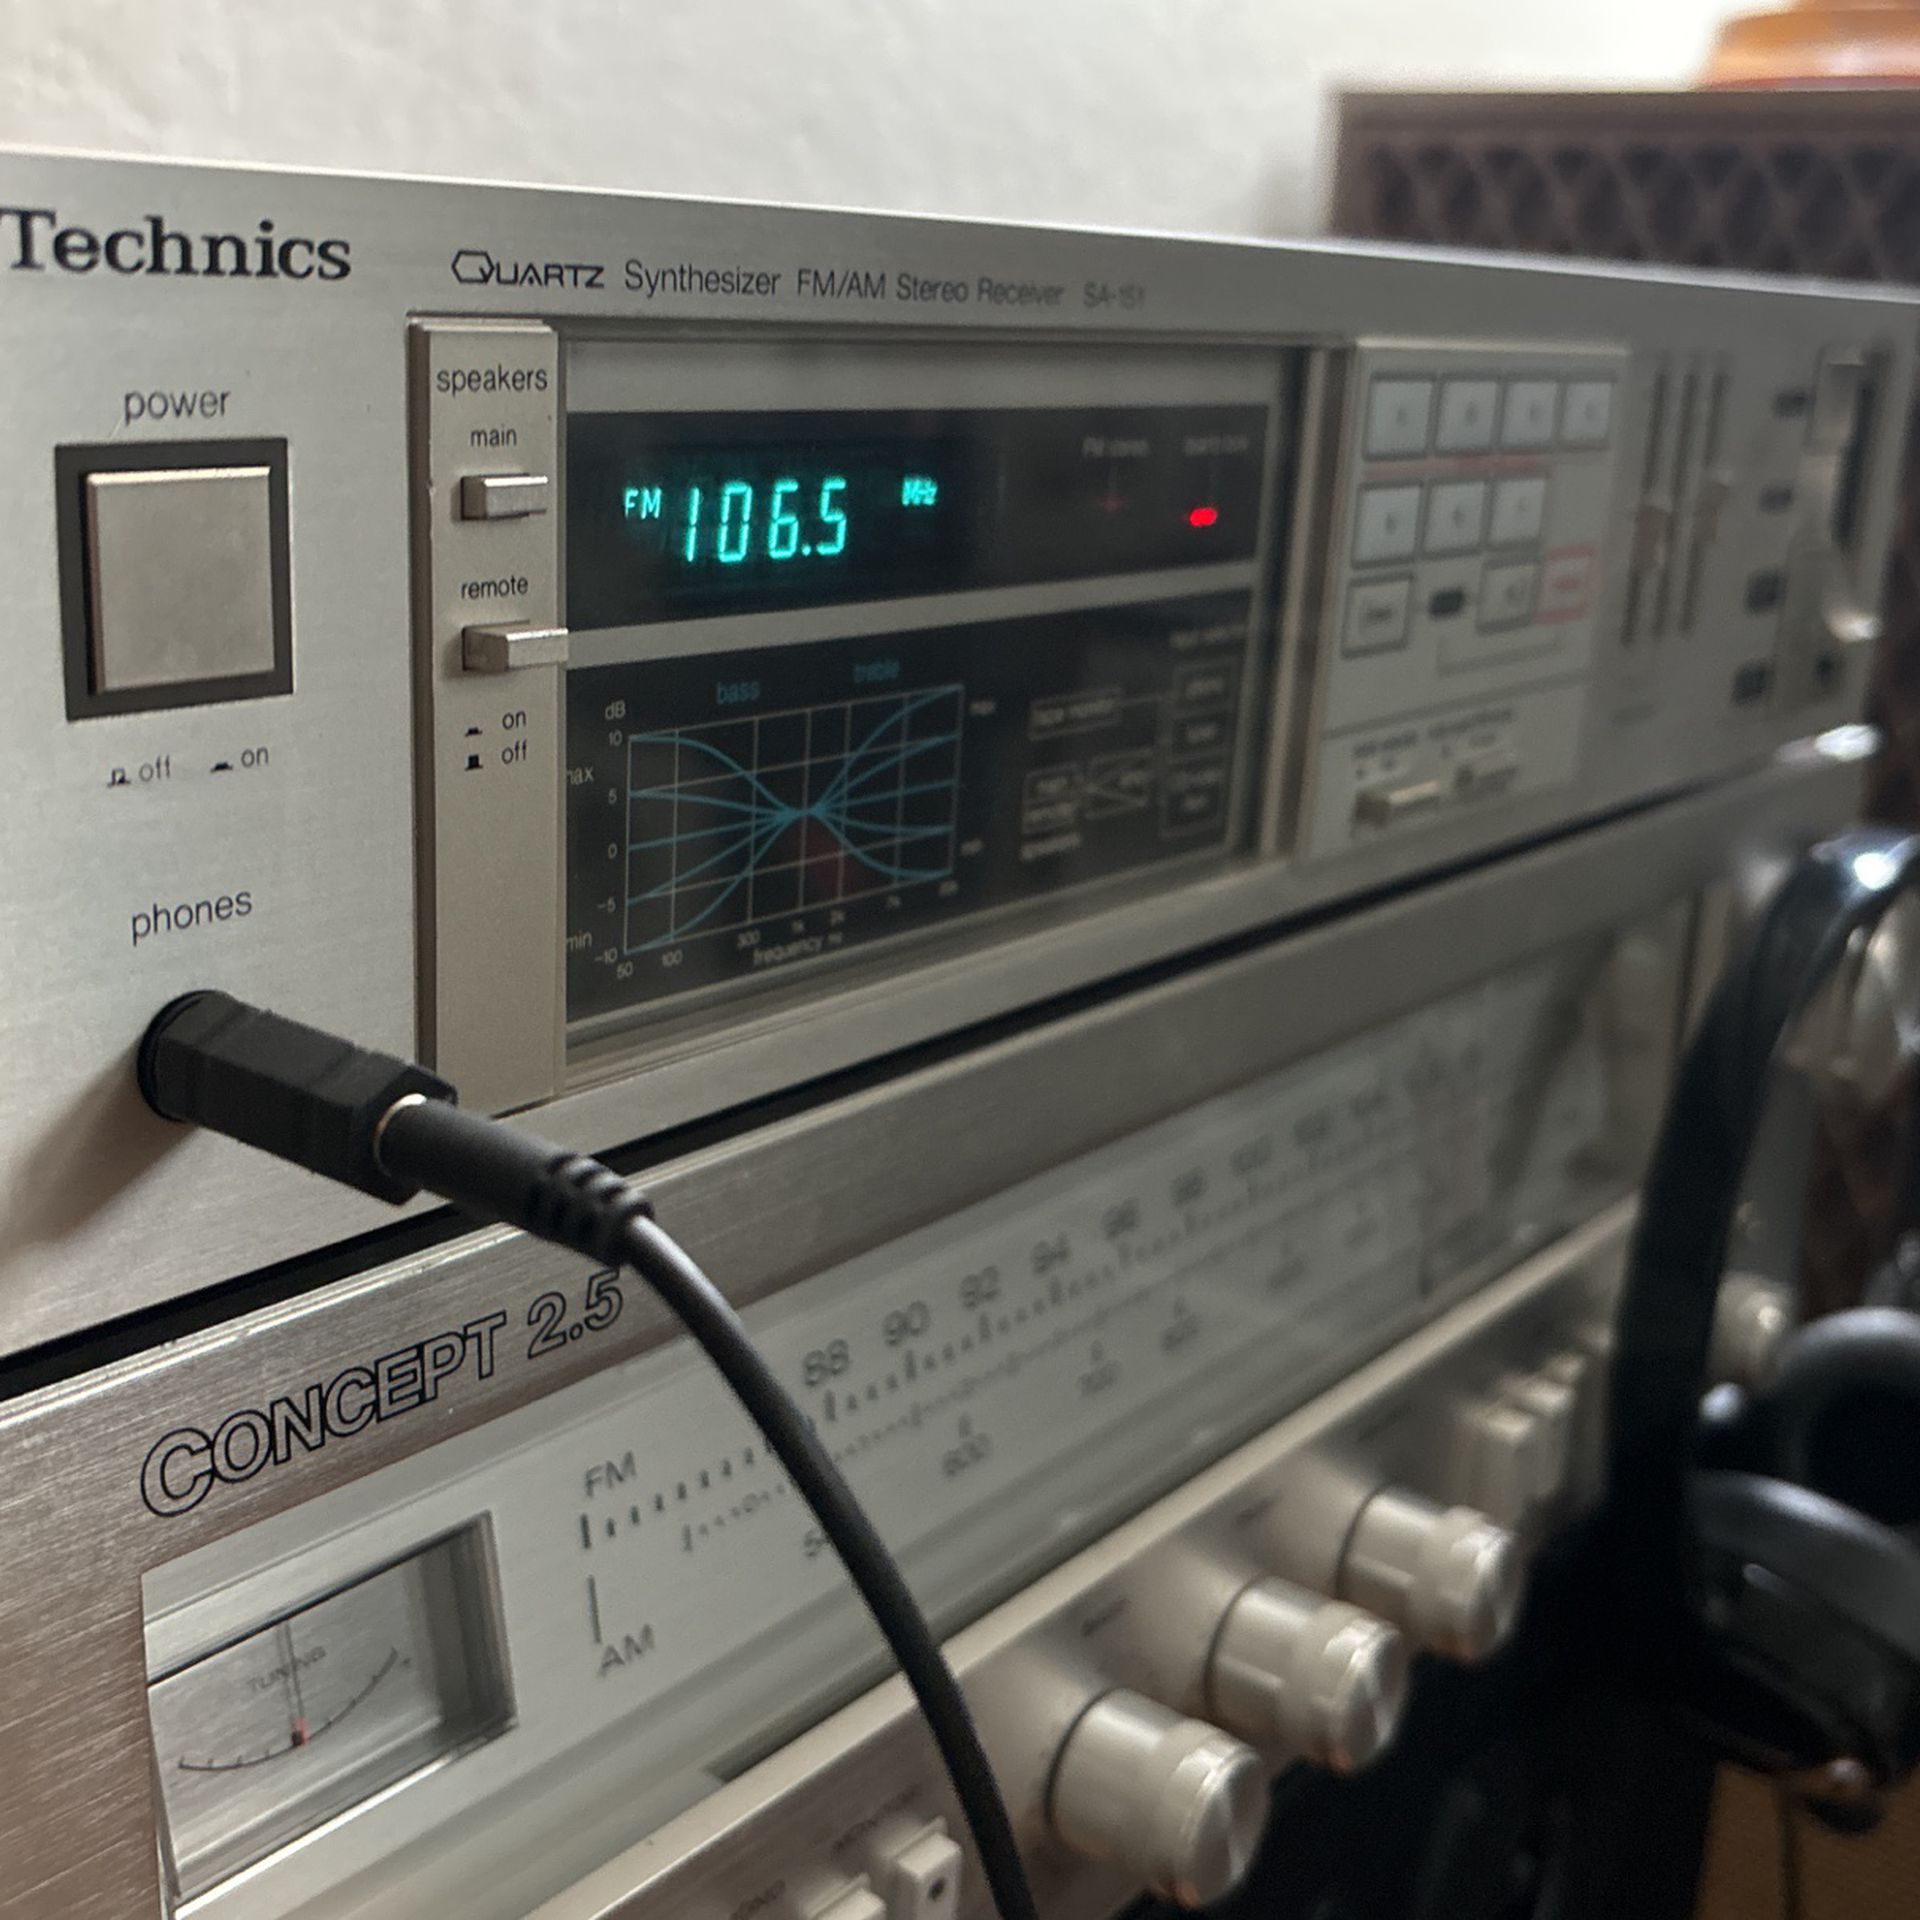 Technics SA-151 Quartz Synthesizer FM/AM Stereo Receiver 